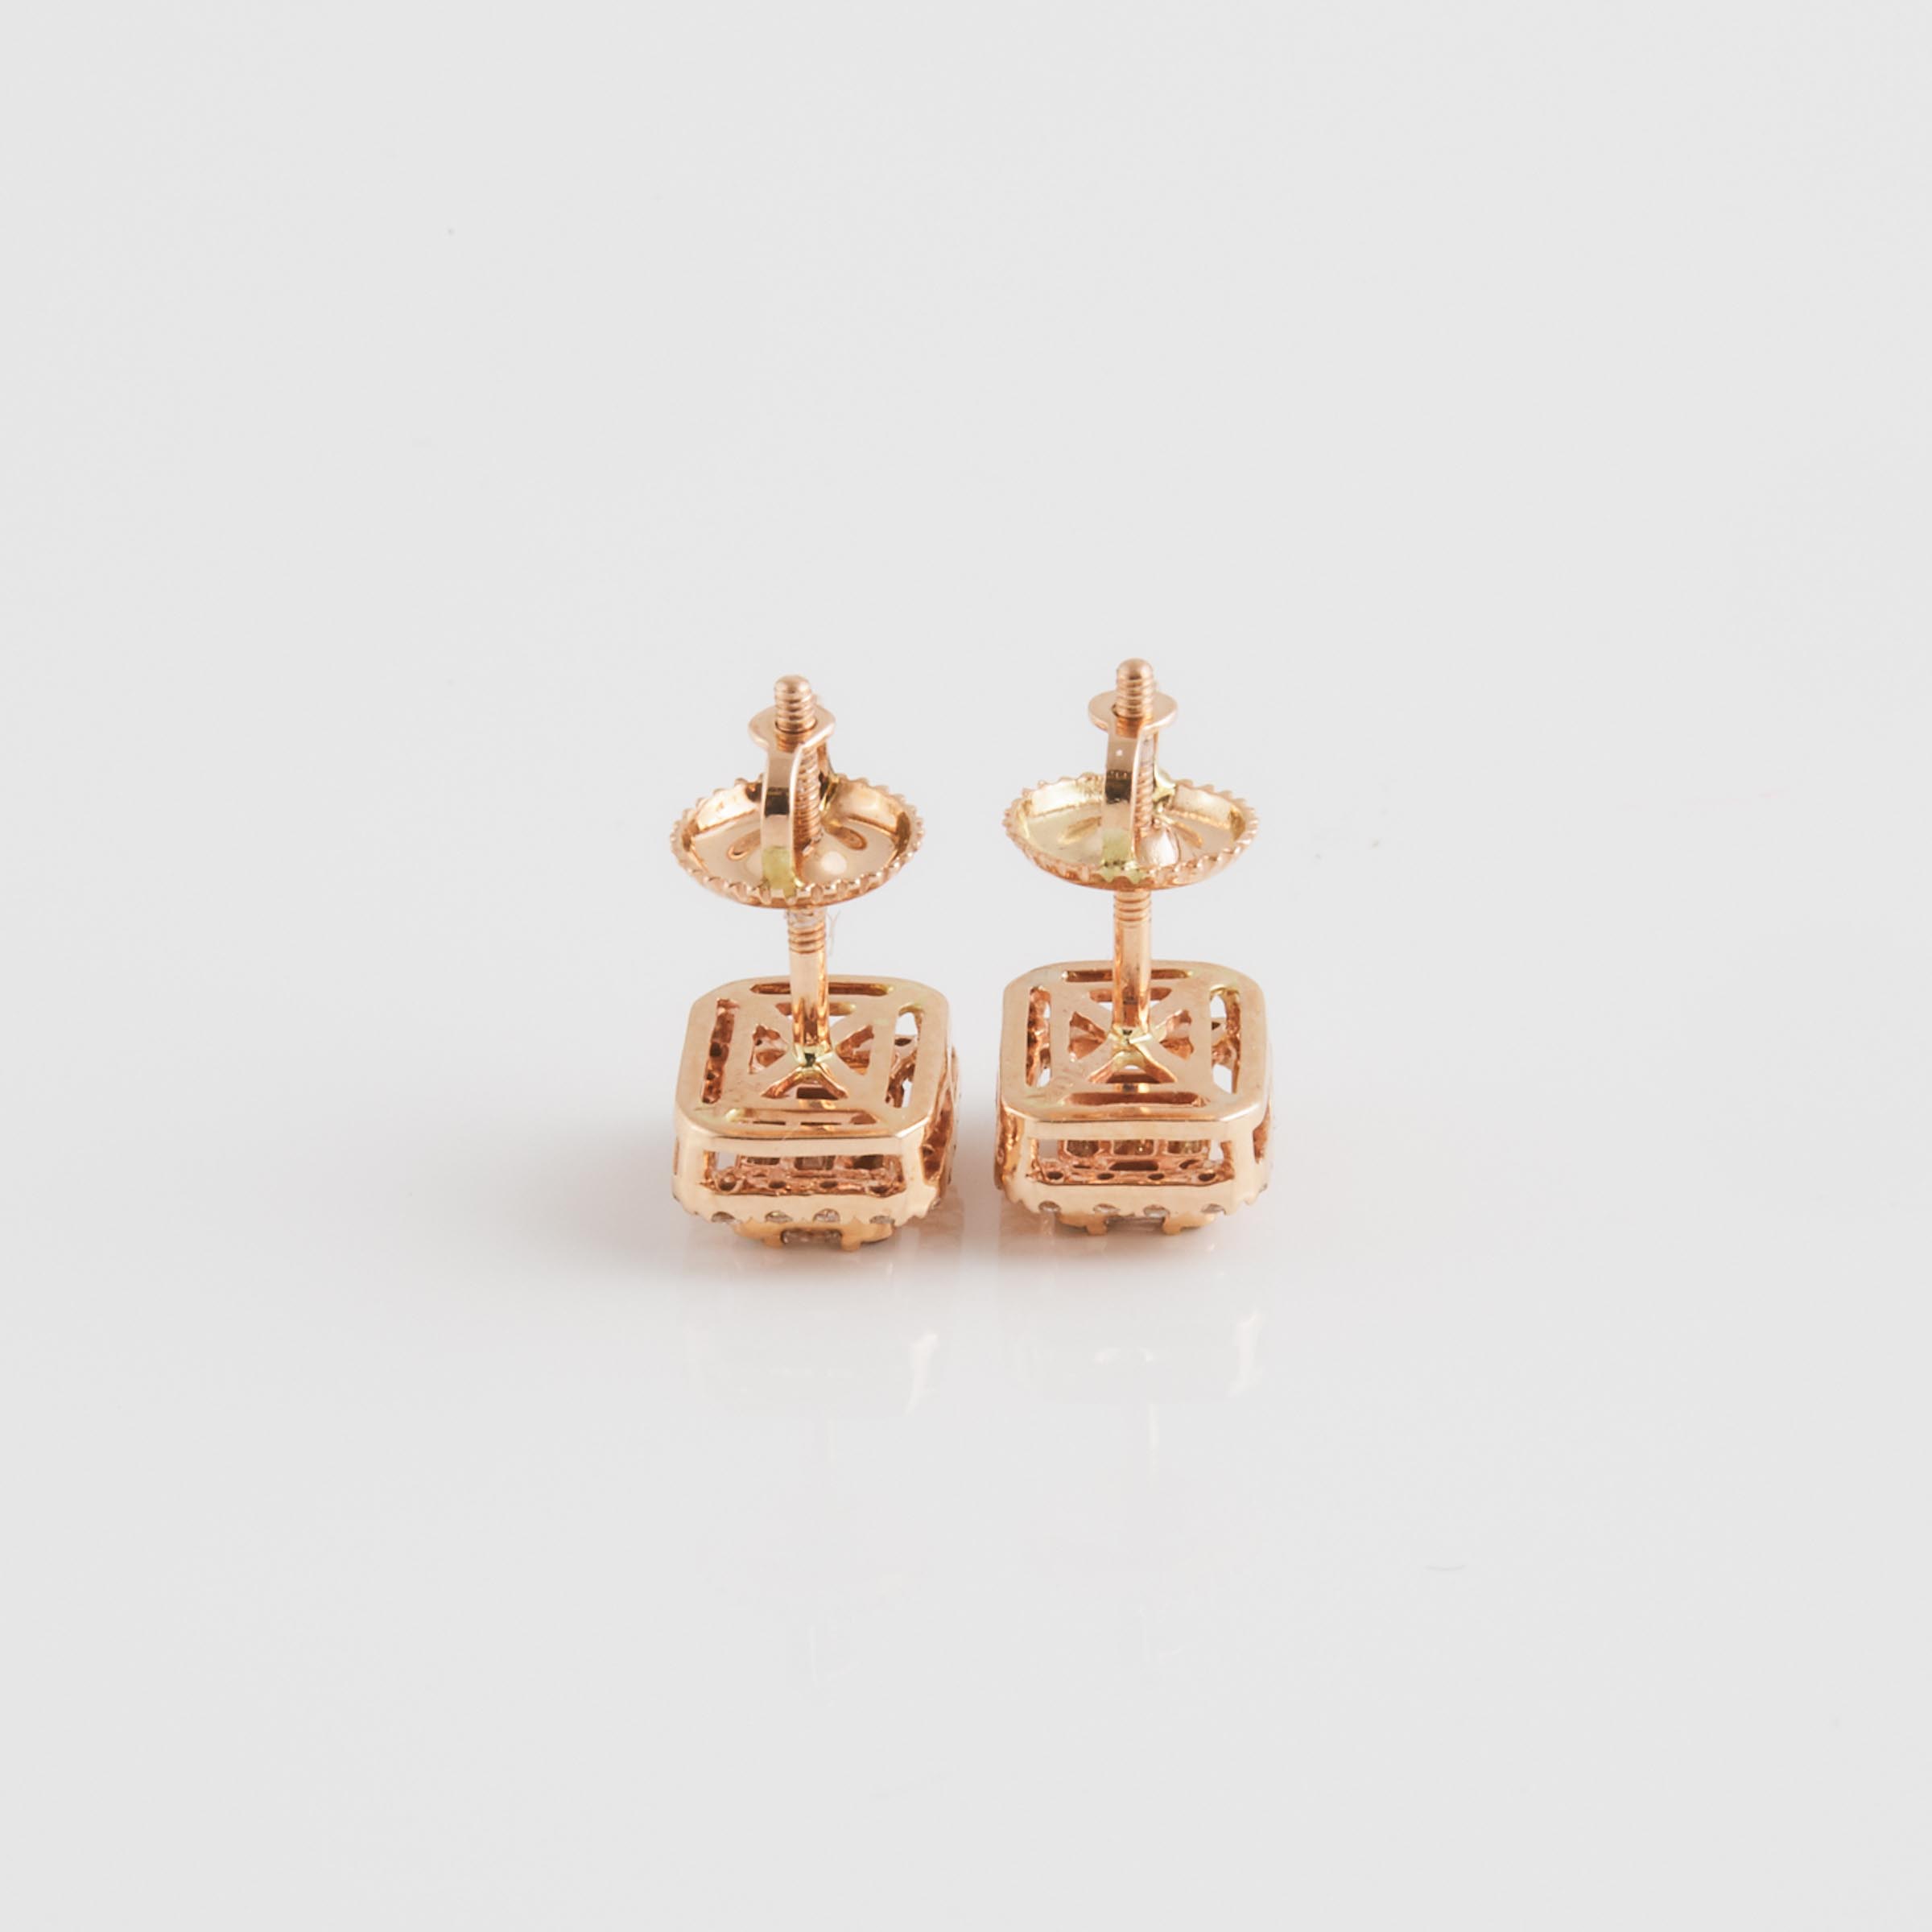 Pair Of 10k Rose Gold Earrings